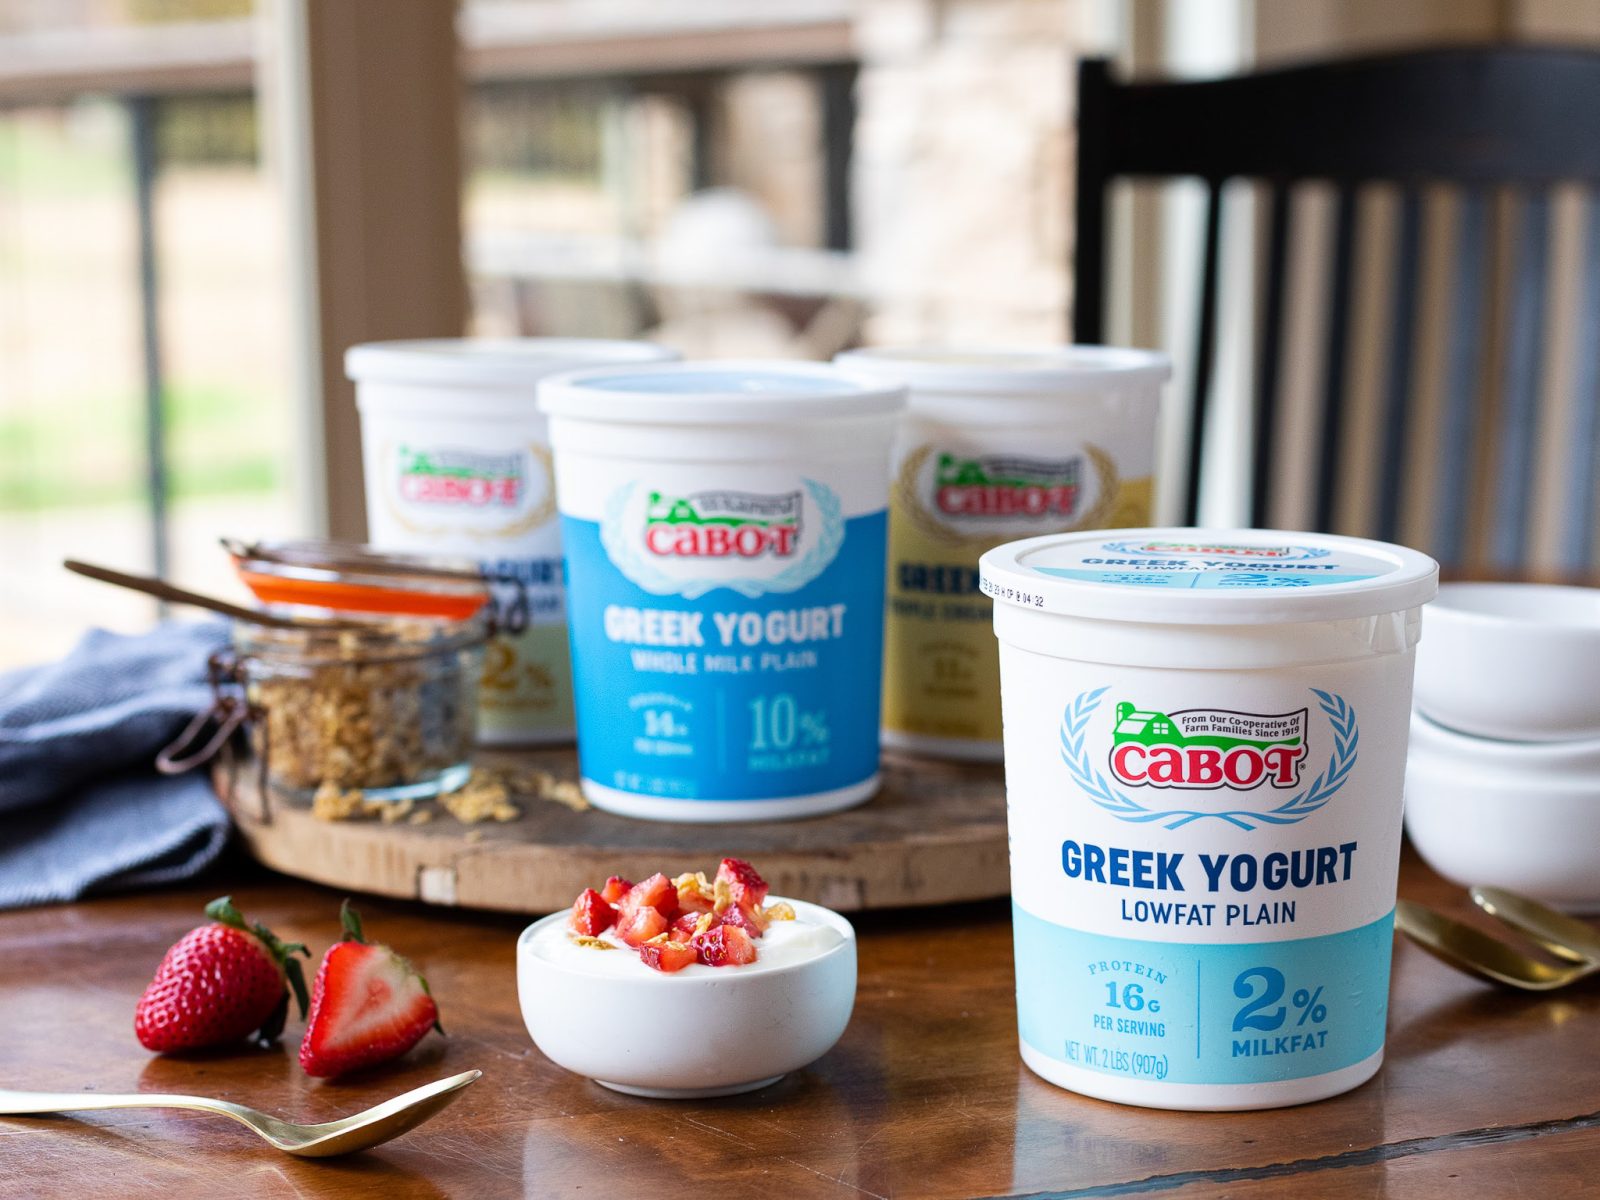 Get A Big Tub Of Cabot Greek Yogurt As Low As $1.90 At Publix